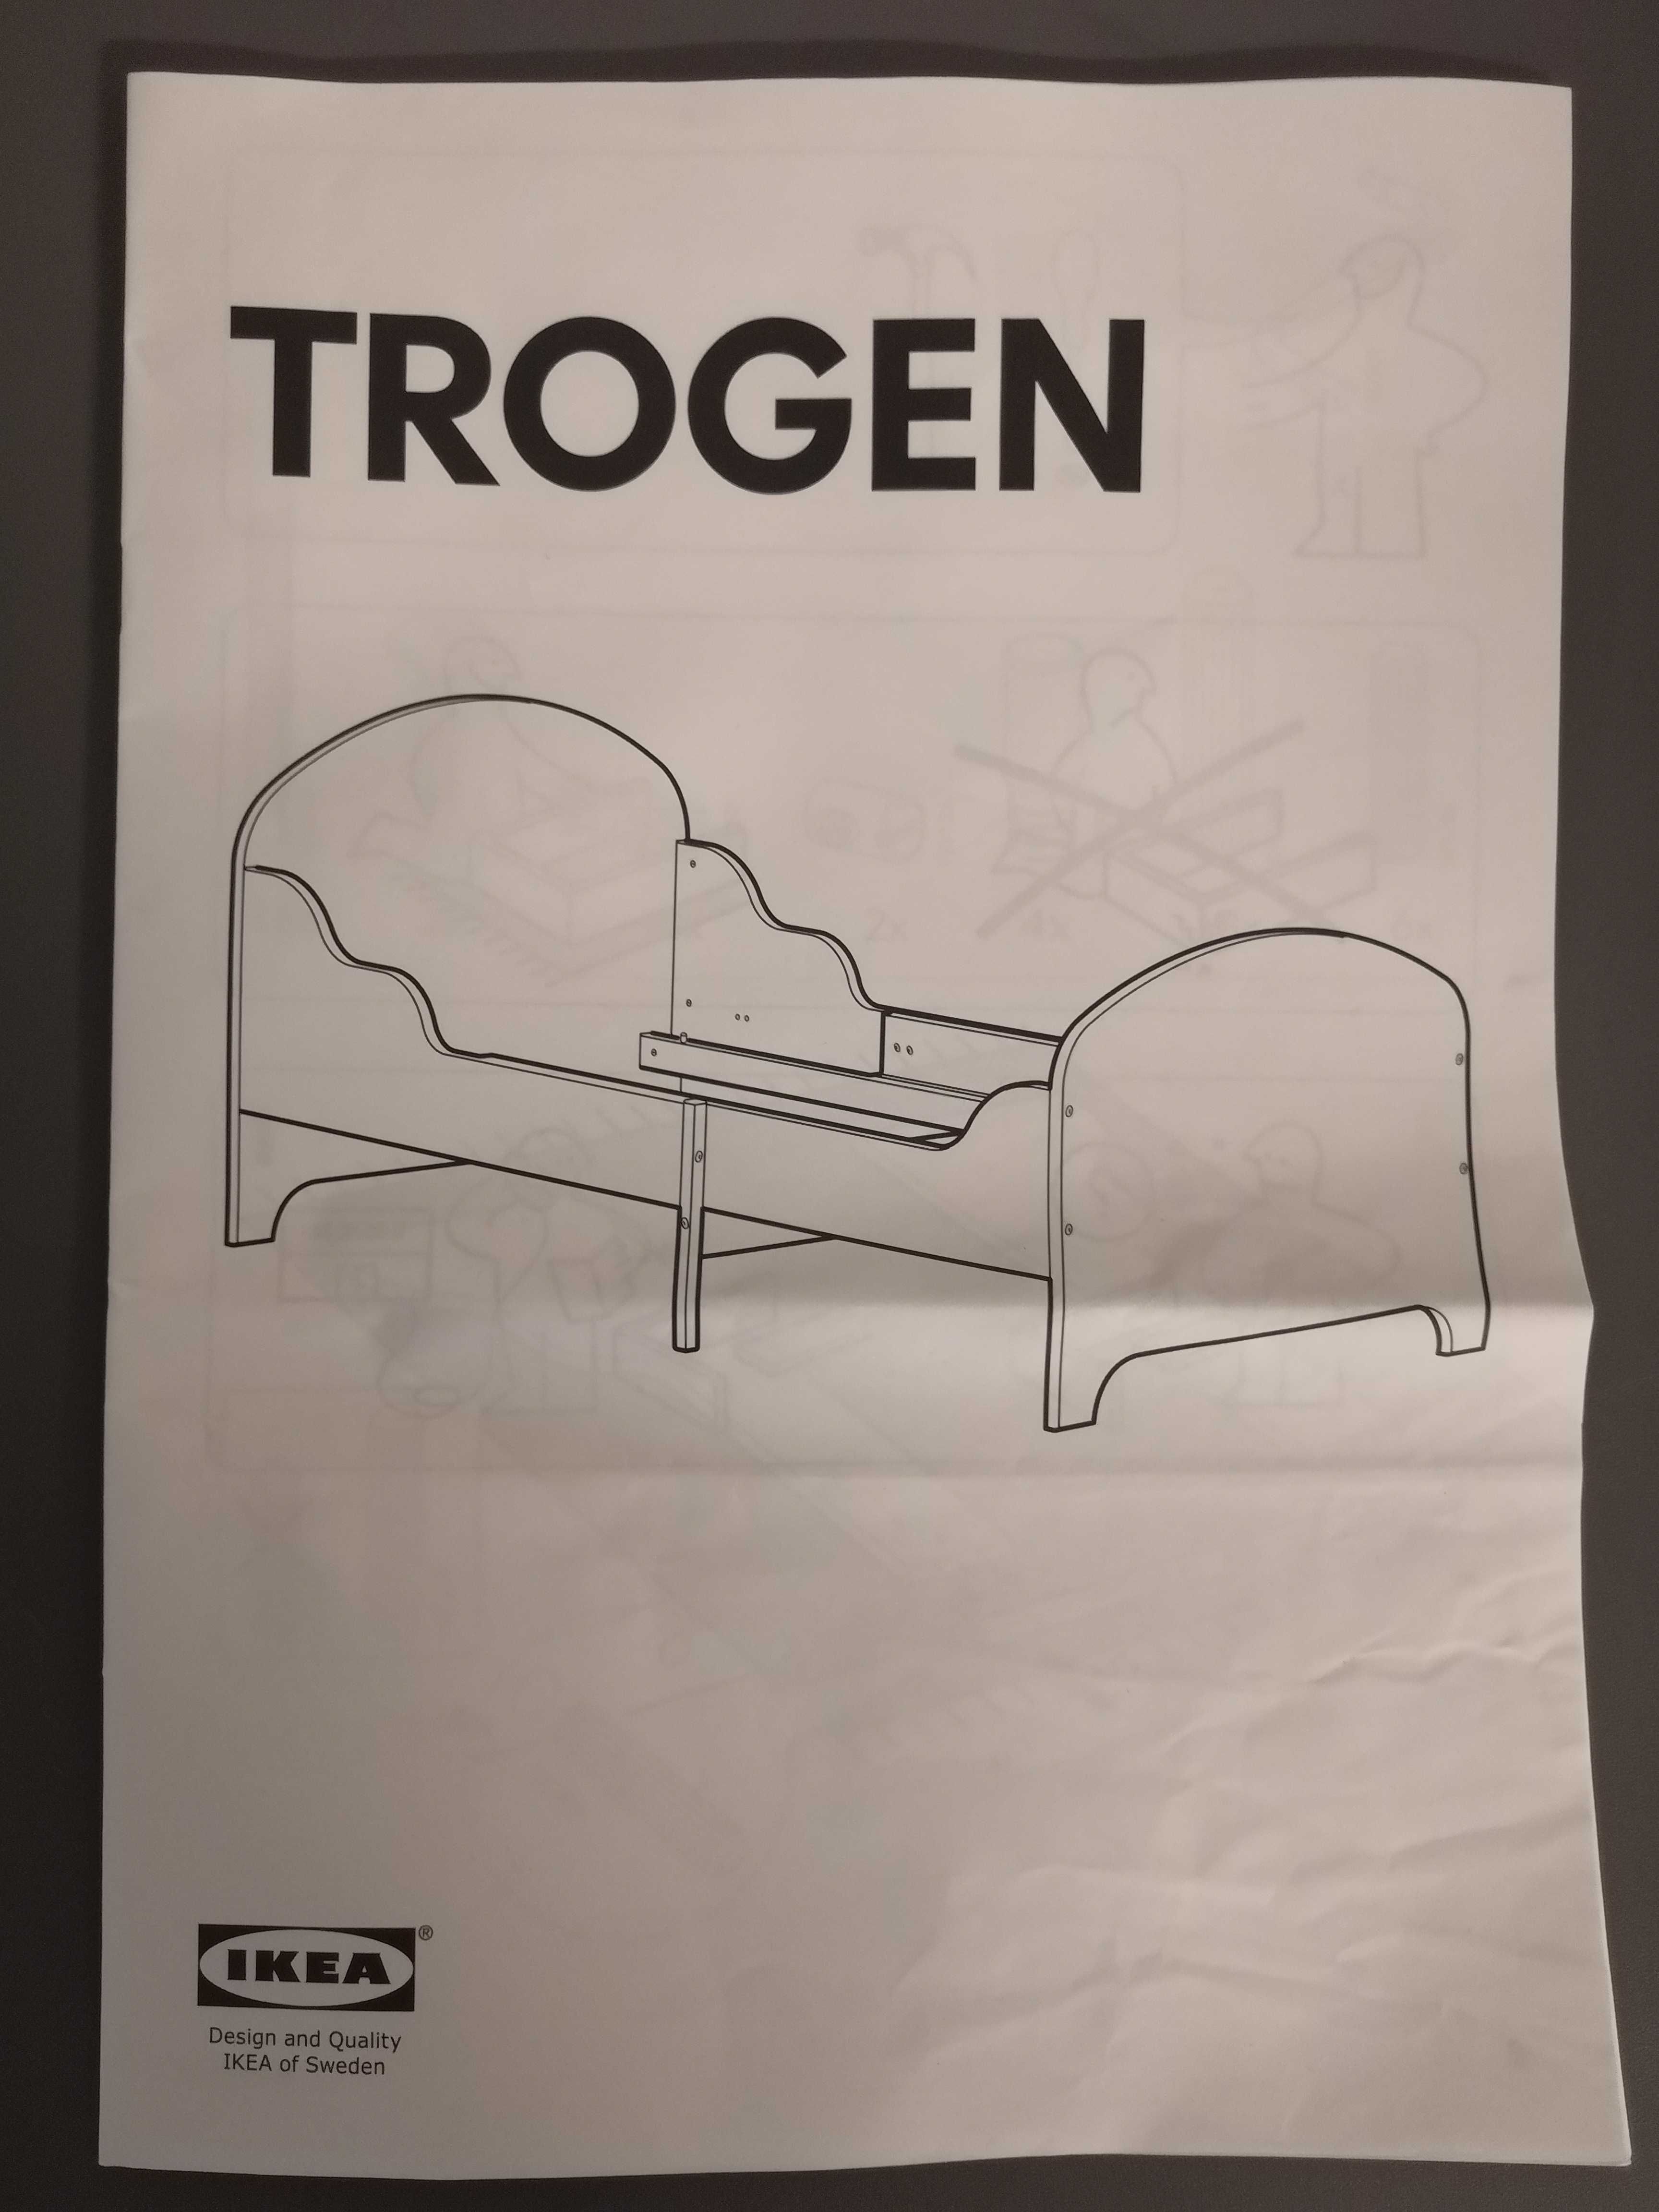 Cama Criança Ikea Trogen